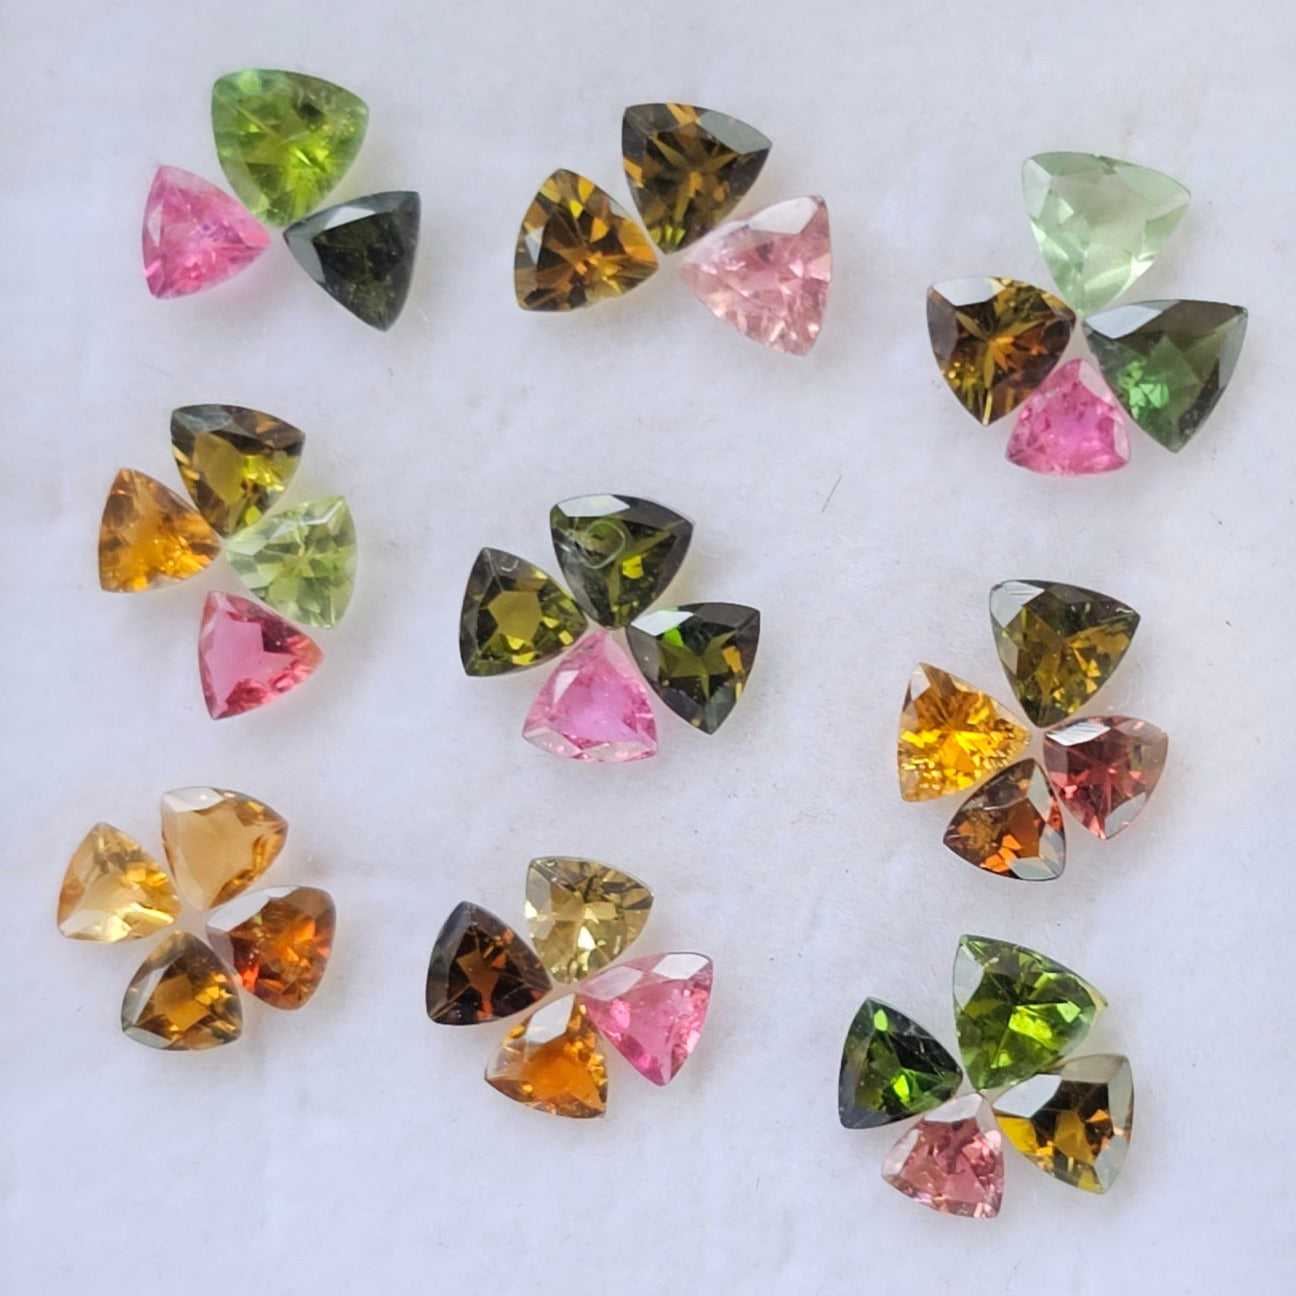 34 Pieces Natural Multi Tourmaline Faceted Gemstones Trillion Shape, 4mm to 5mm - The LabradoriteKing